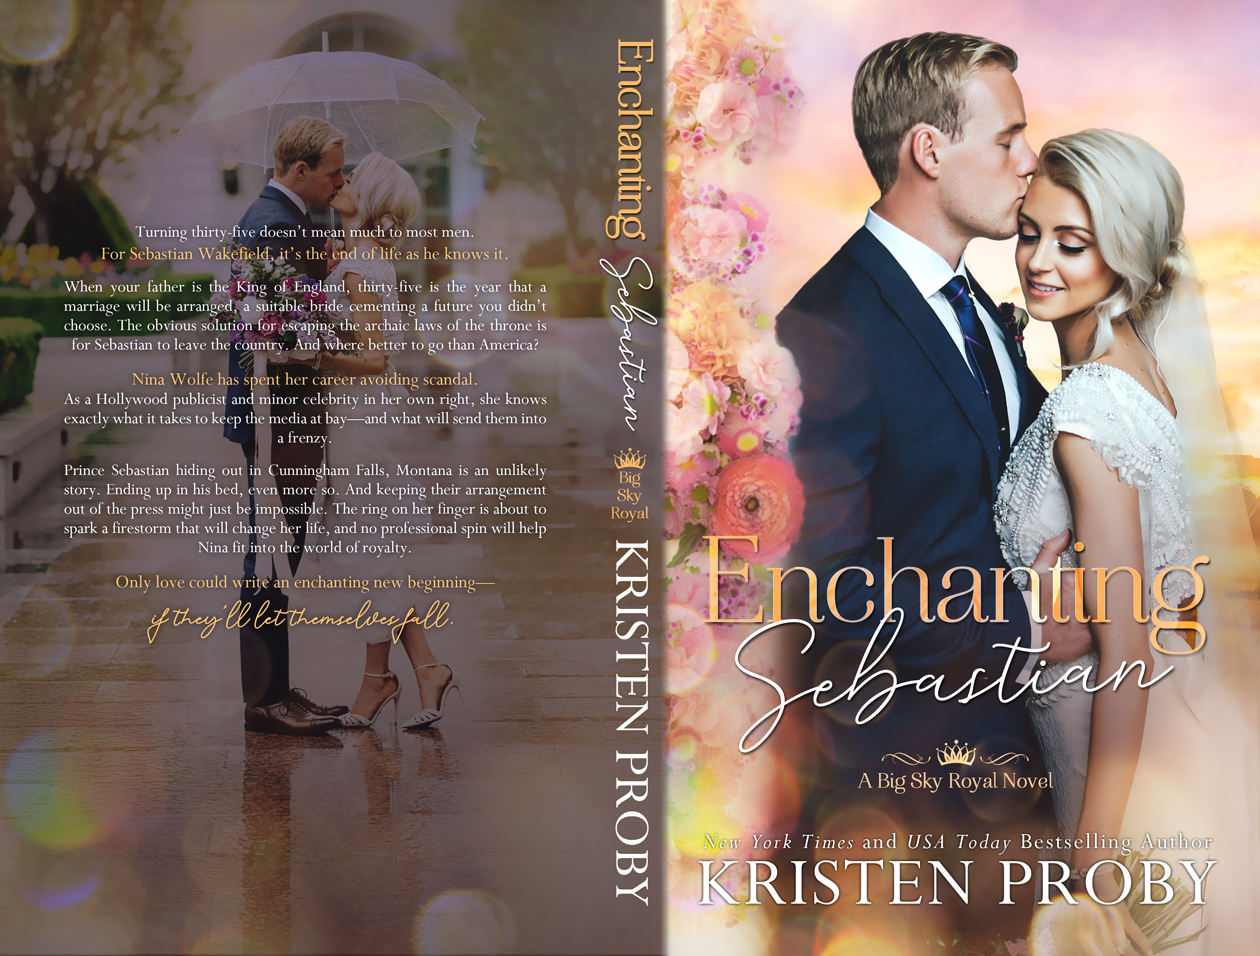 pure romance in Enchanting Sebastian by Kristen Proby  👑 💖